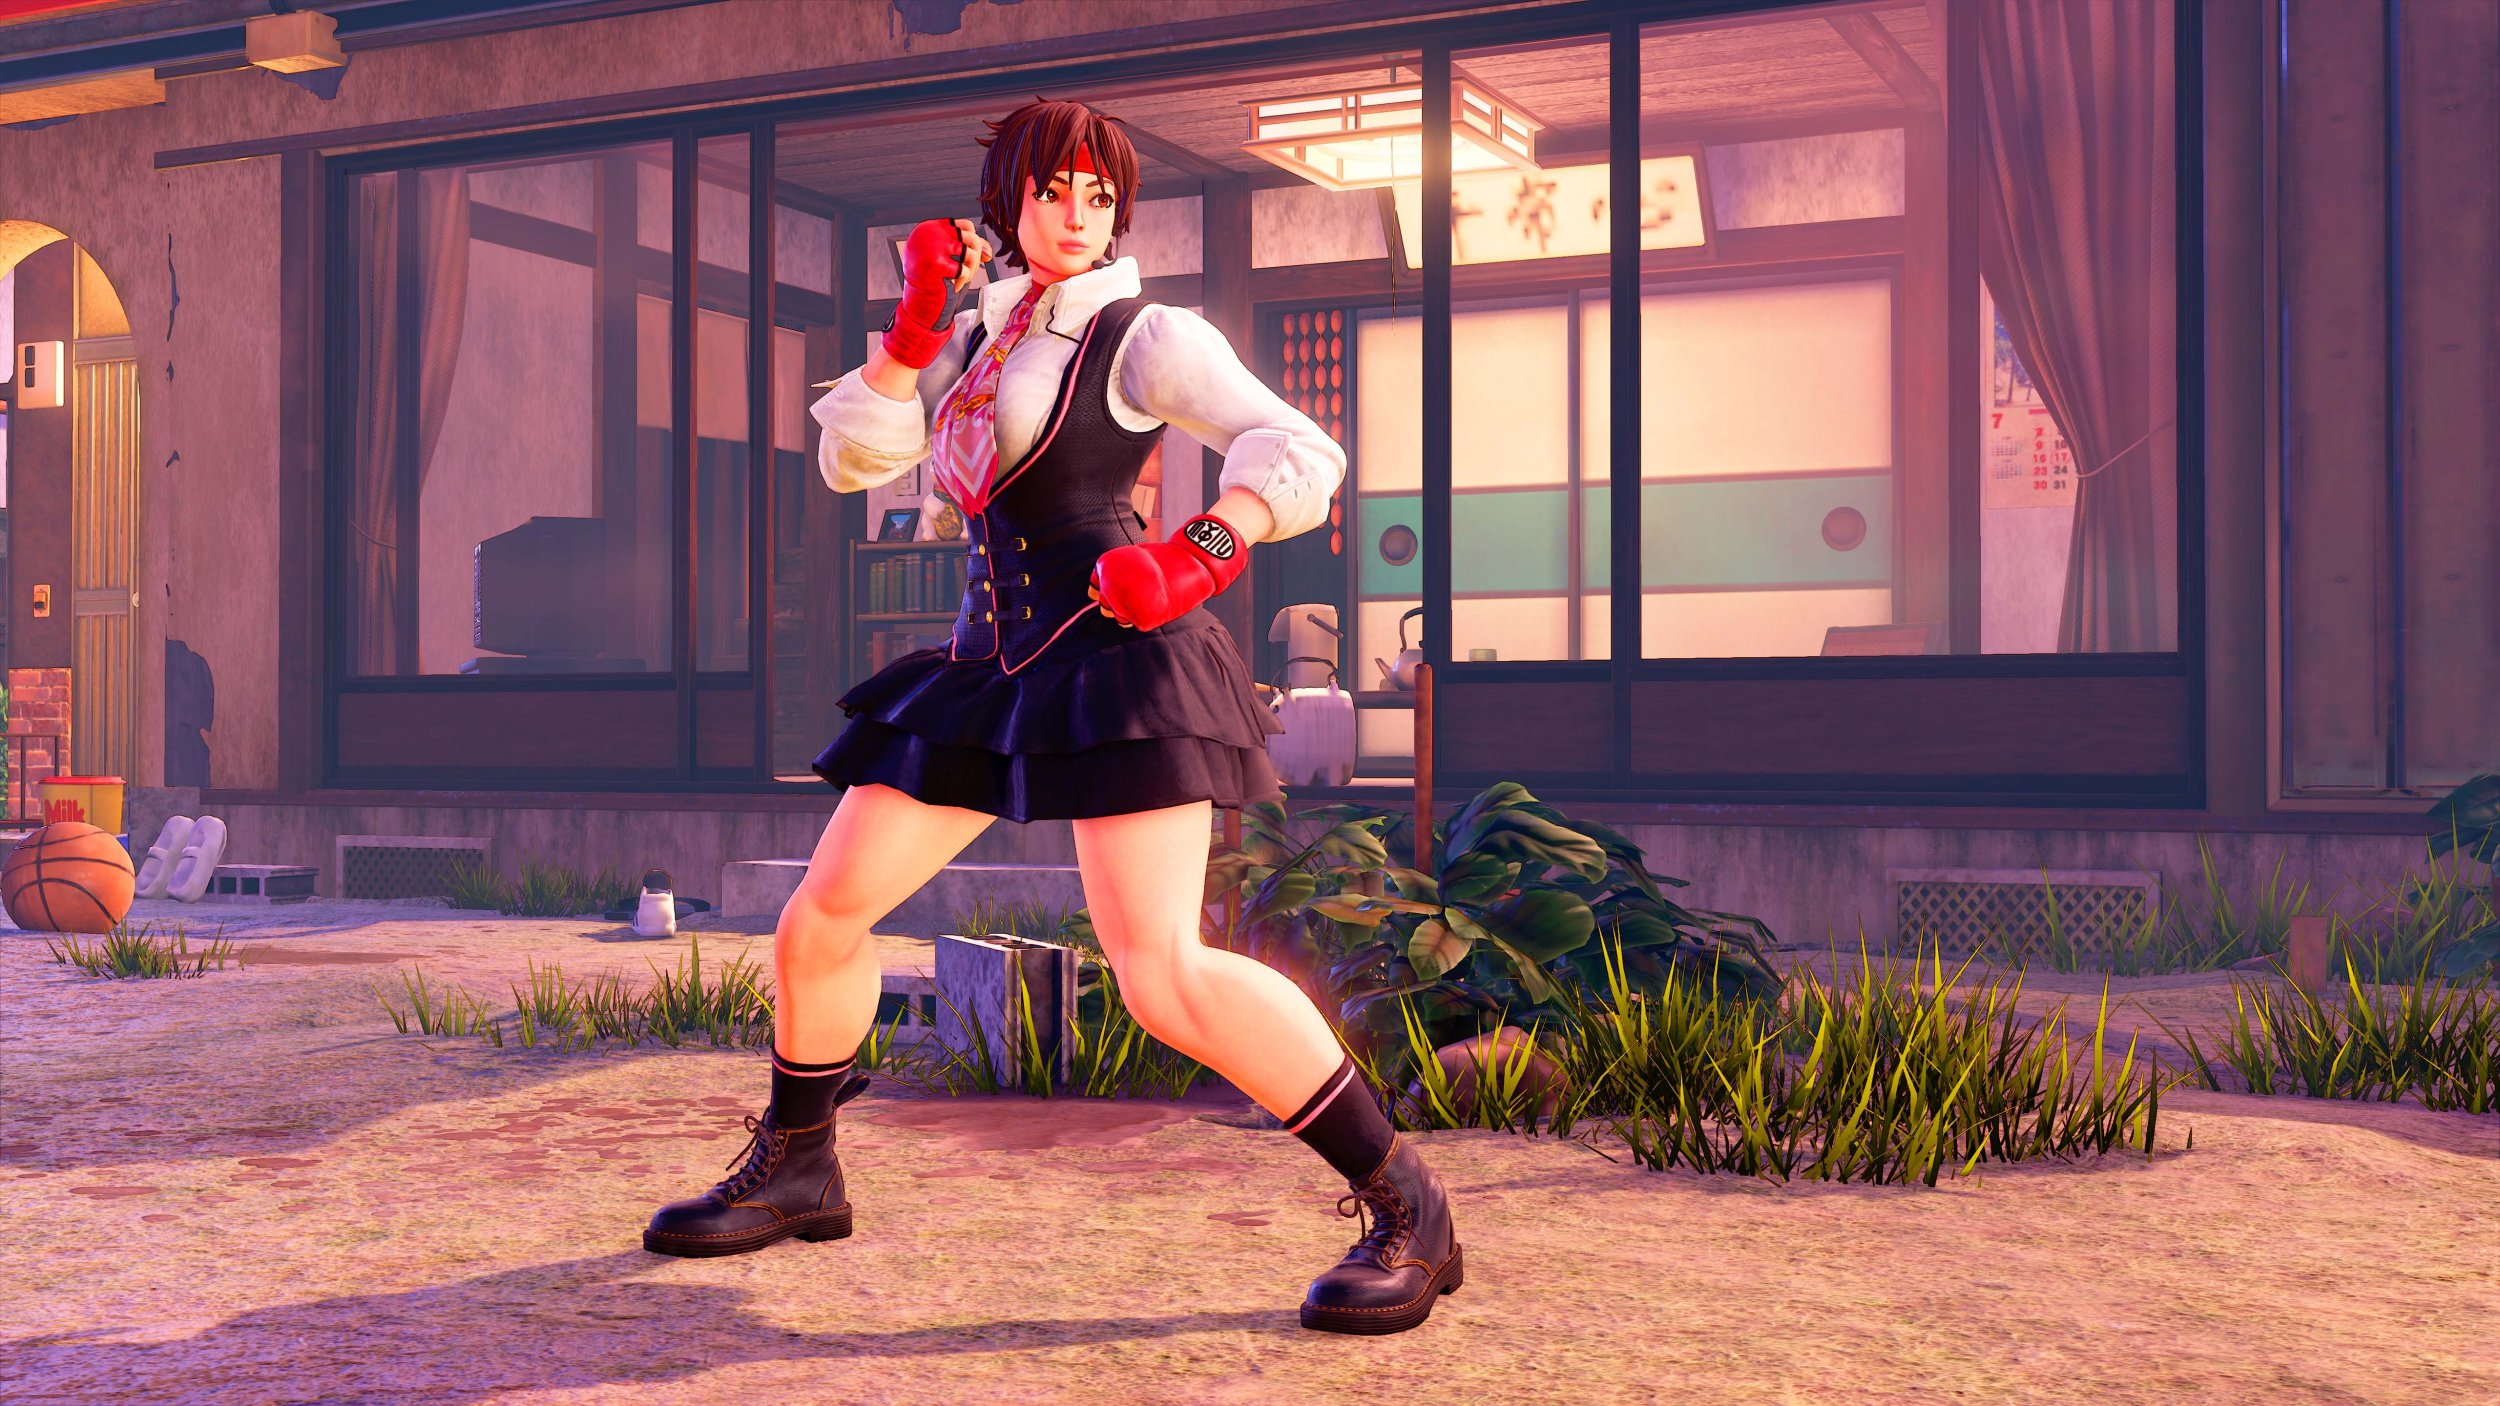 Street Fighter V To Get Returning Characters Sakura, Blanka, Cody